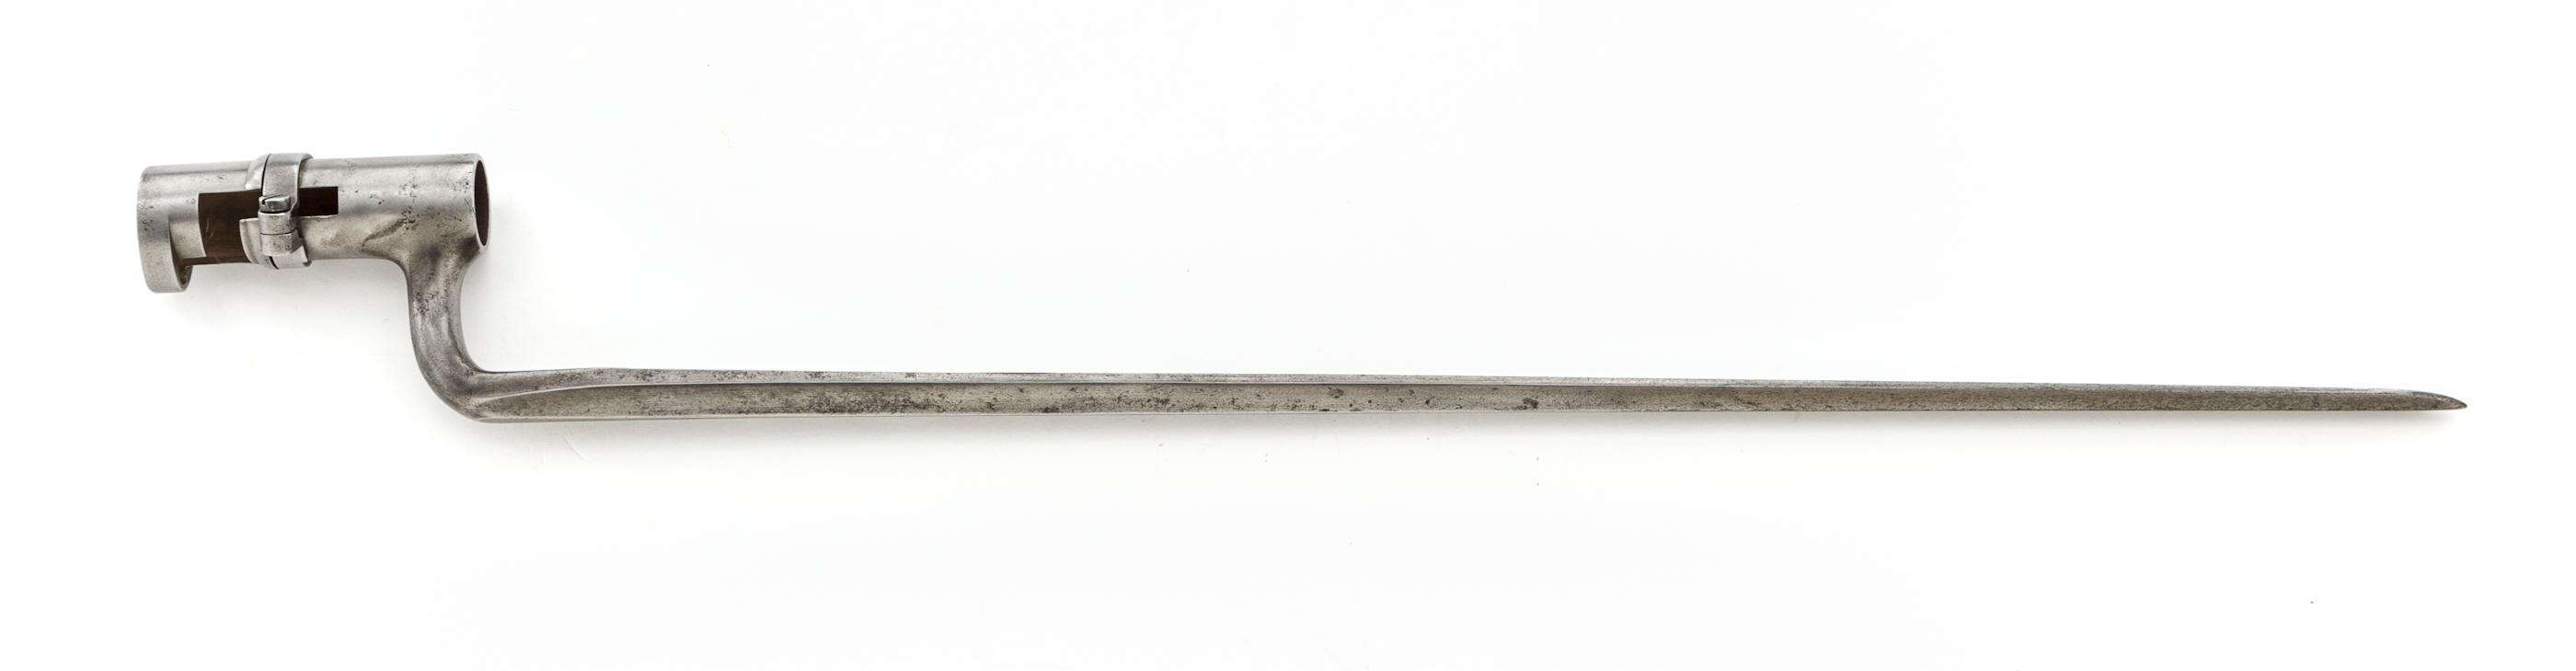 Springfield 1868 Allin Trapdoor Rifle